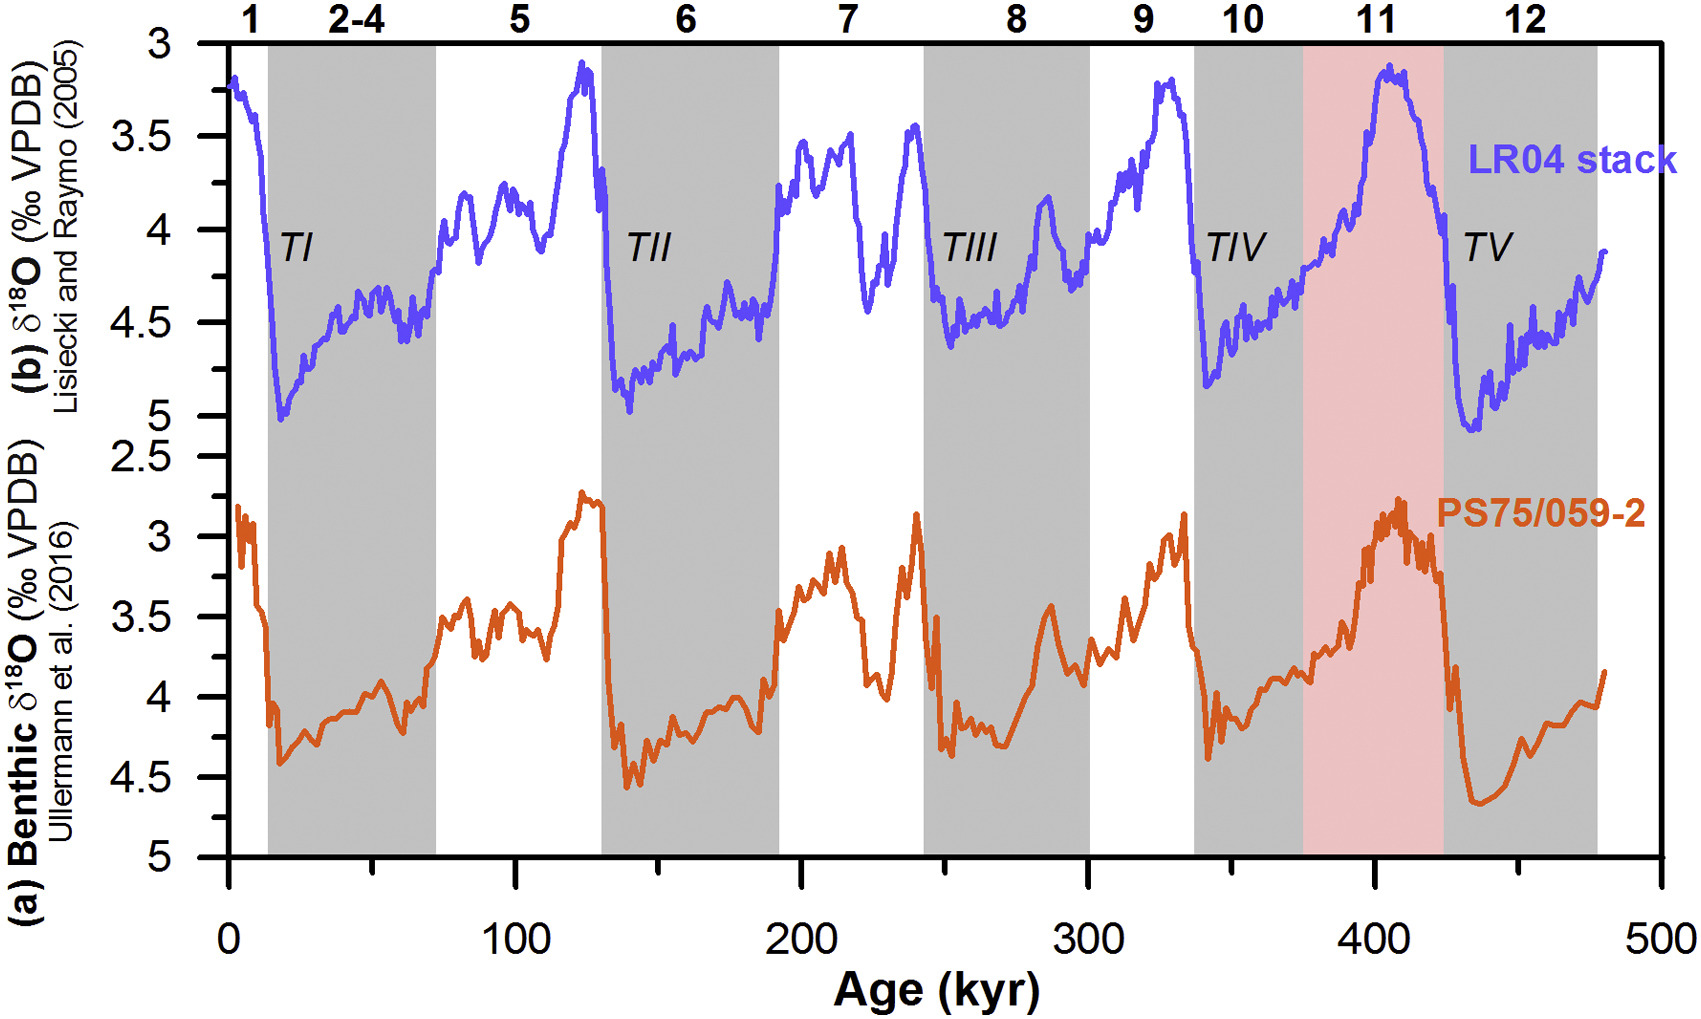 quaternary time period climate